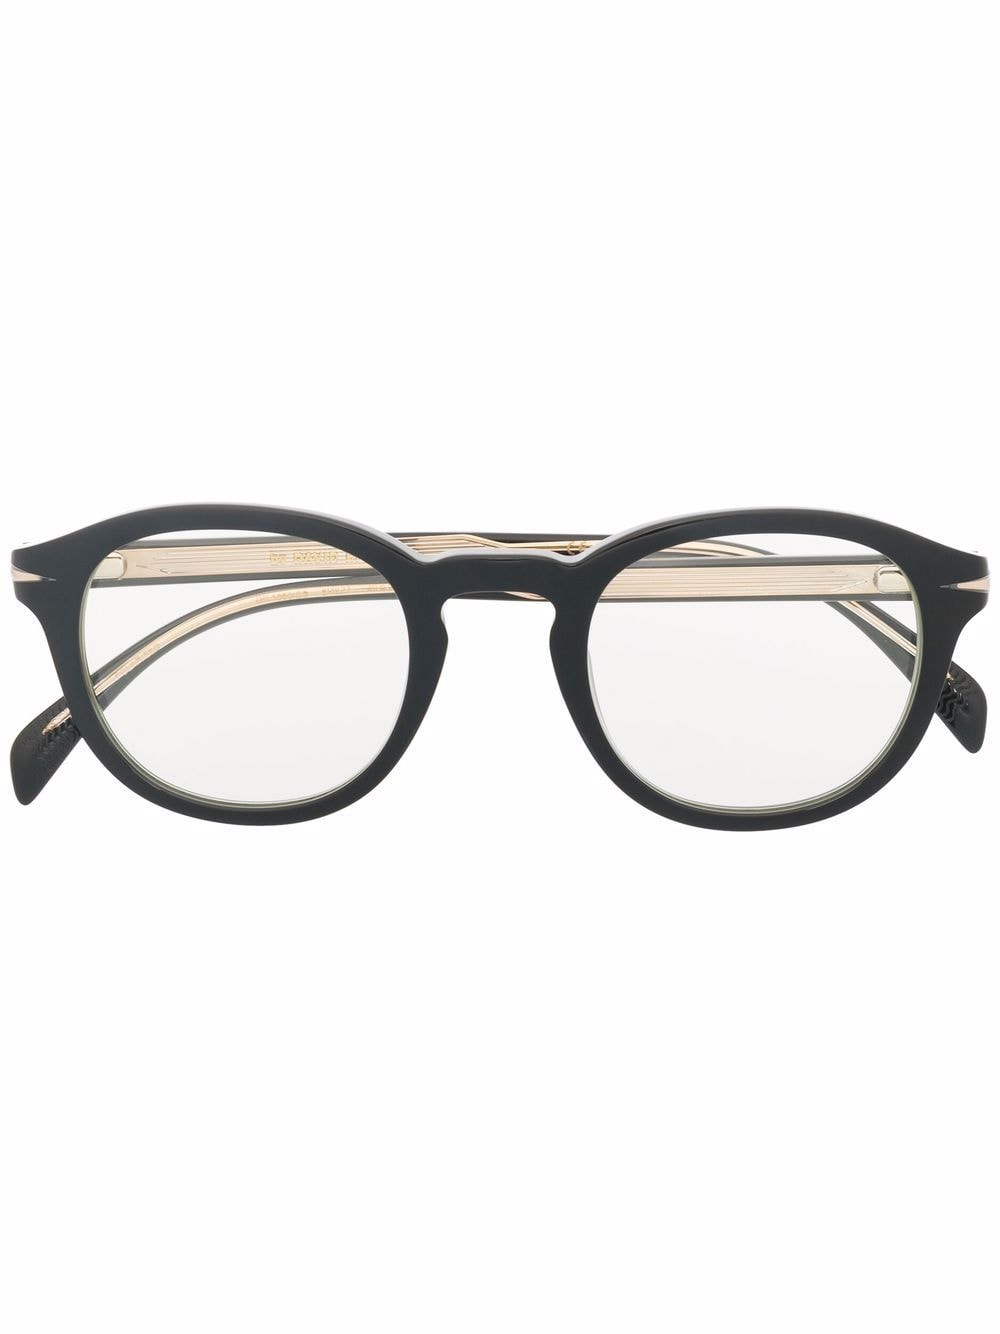 Eyewear by David Beckham round-frame glasses - Black von Eyewear by David Beckham